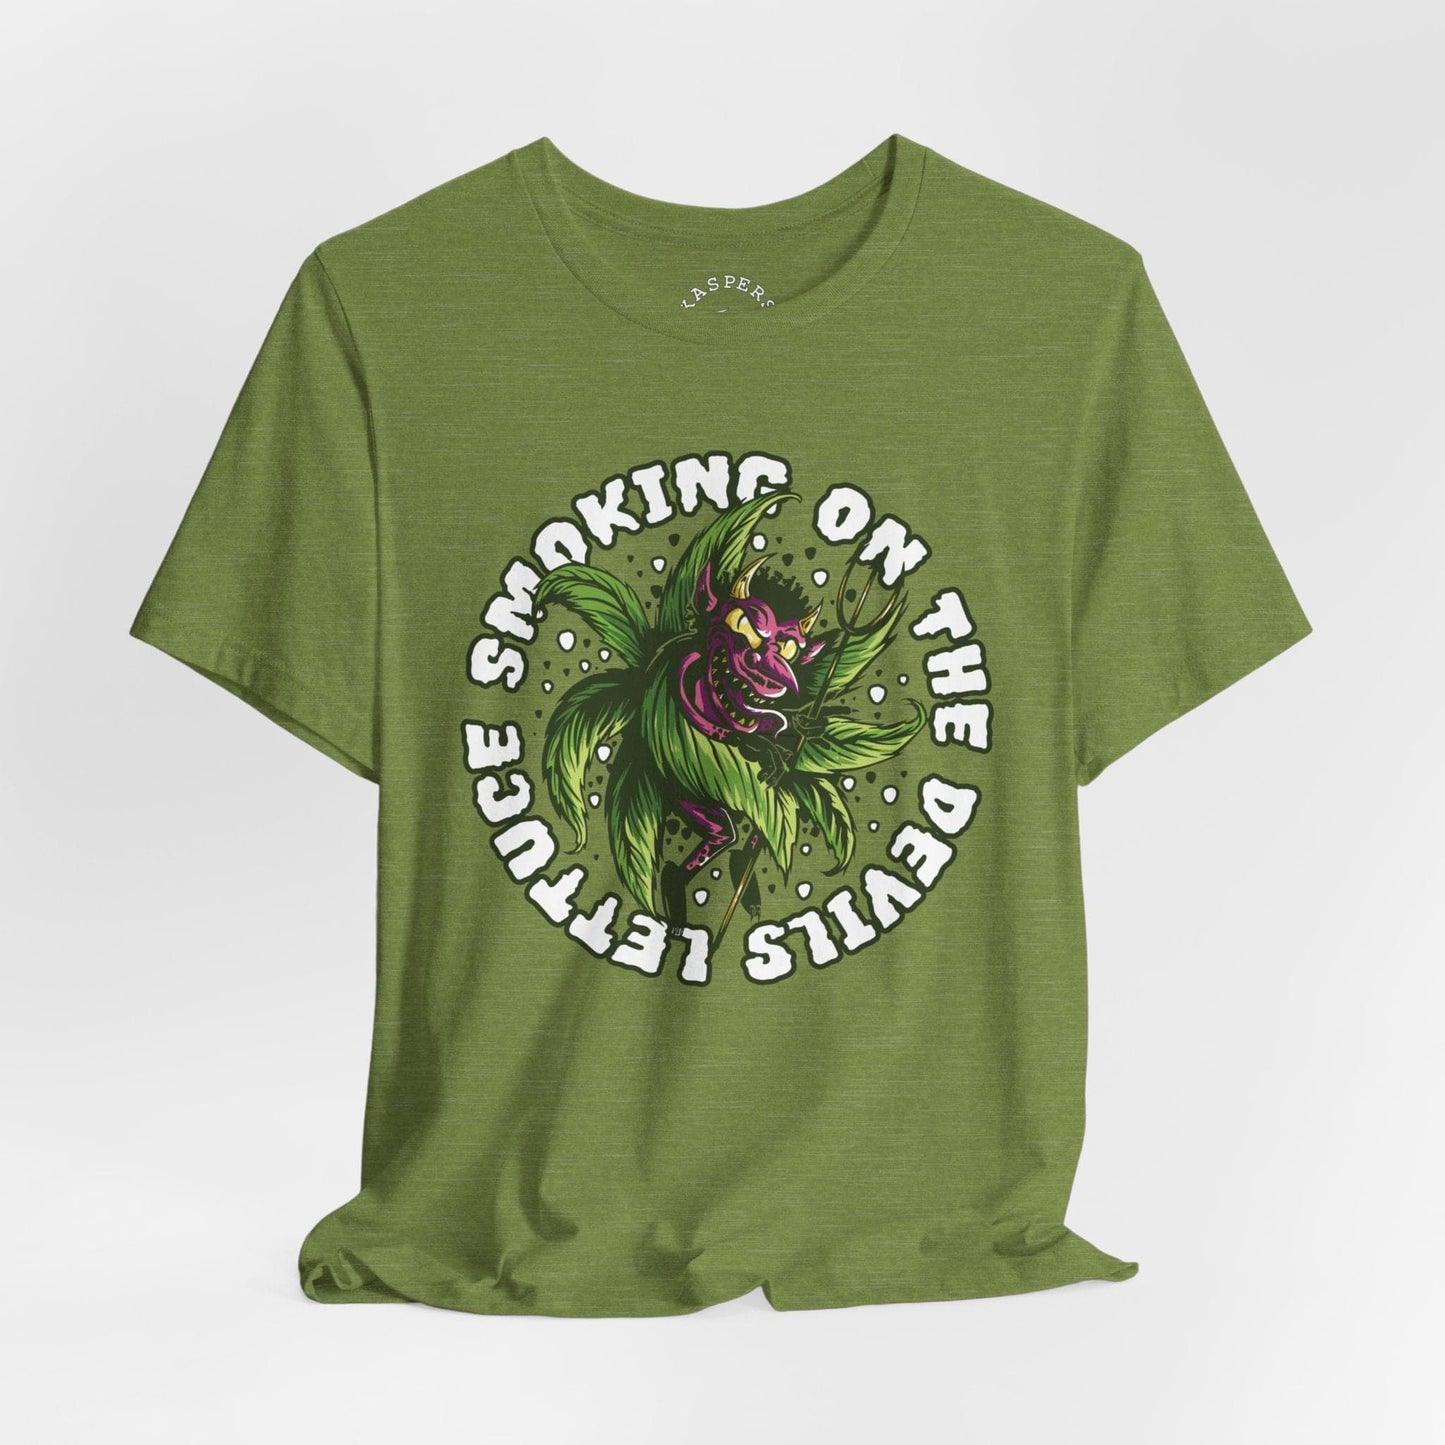 Smoking On The Devils Lettuce T-Shirt